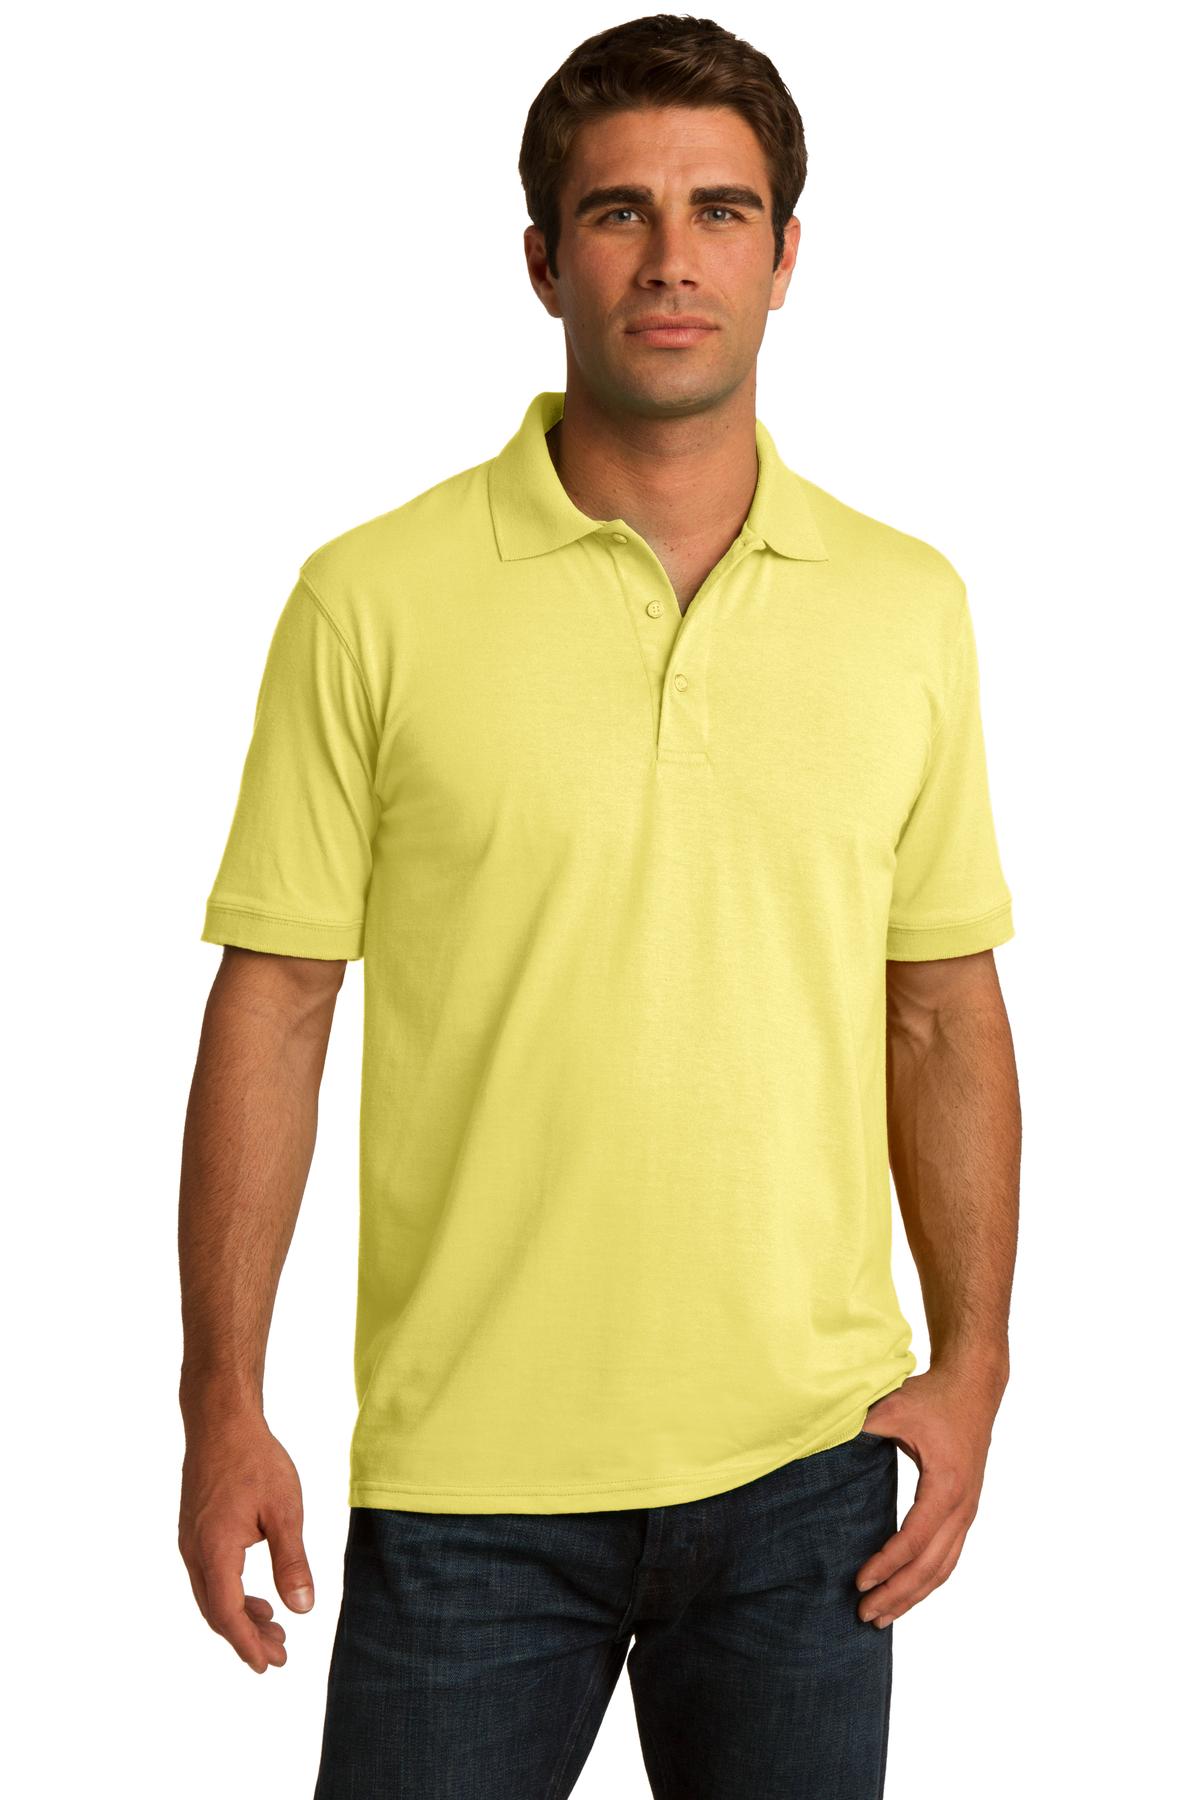 Port & Company Men's 5.5-Ounce Jersey Knit Polo Shirt KP55